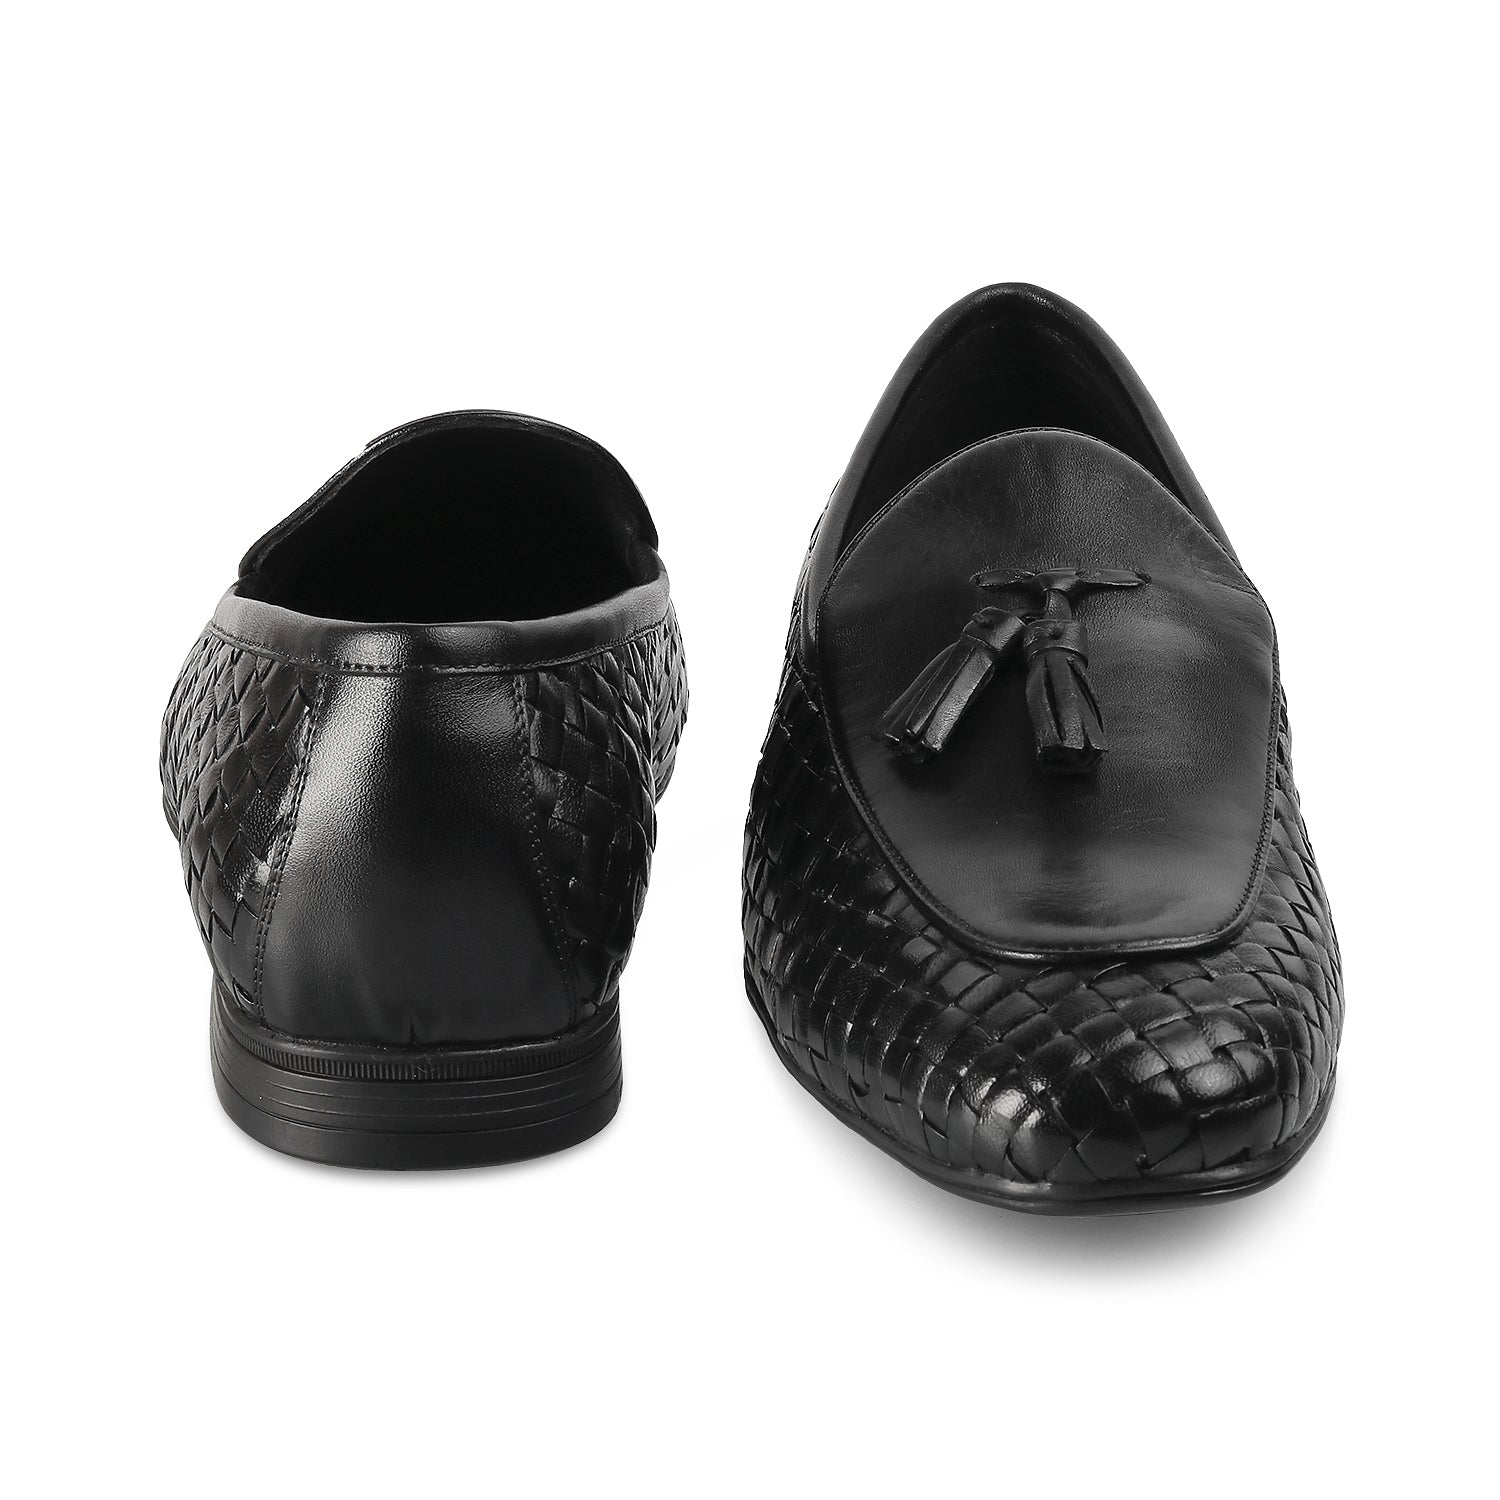 Sobhach Black Men's Smart Casual Leather Loafer Online at Tresmode.com